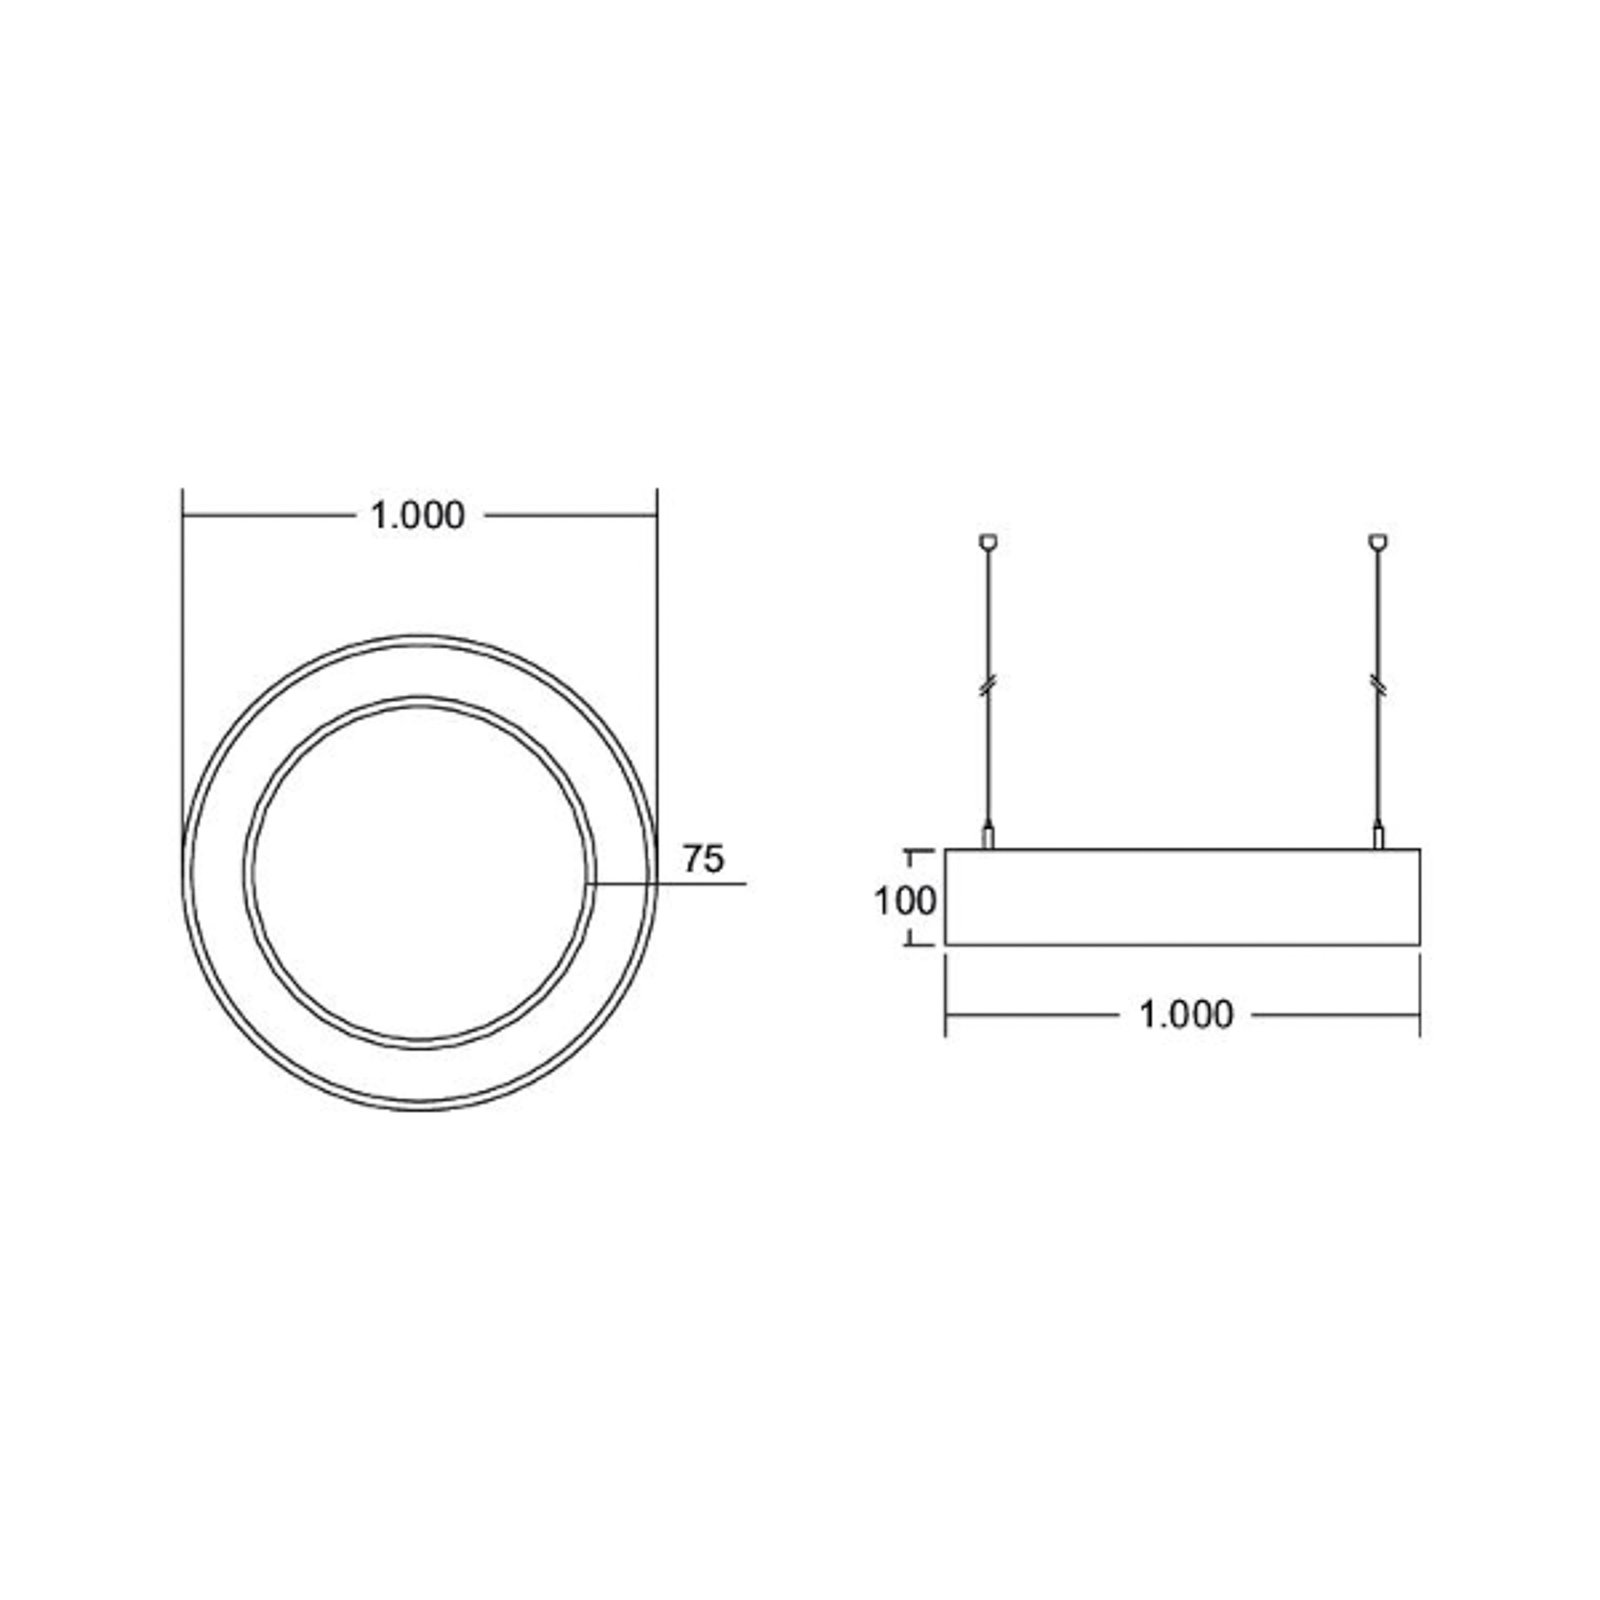 BRUMBERG Biro Circle Ring direct on/off, 100cm, white, 4000 K